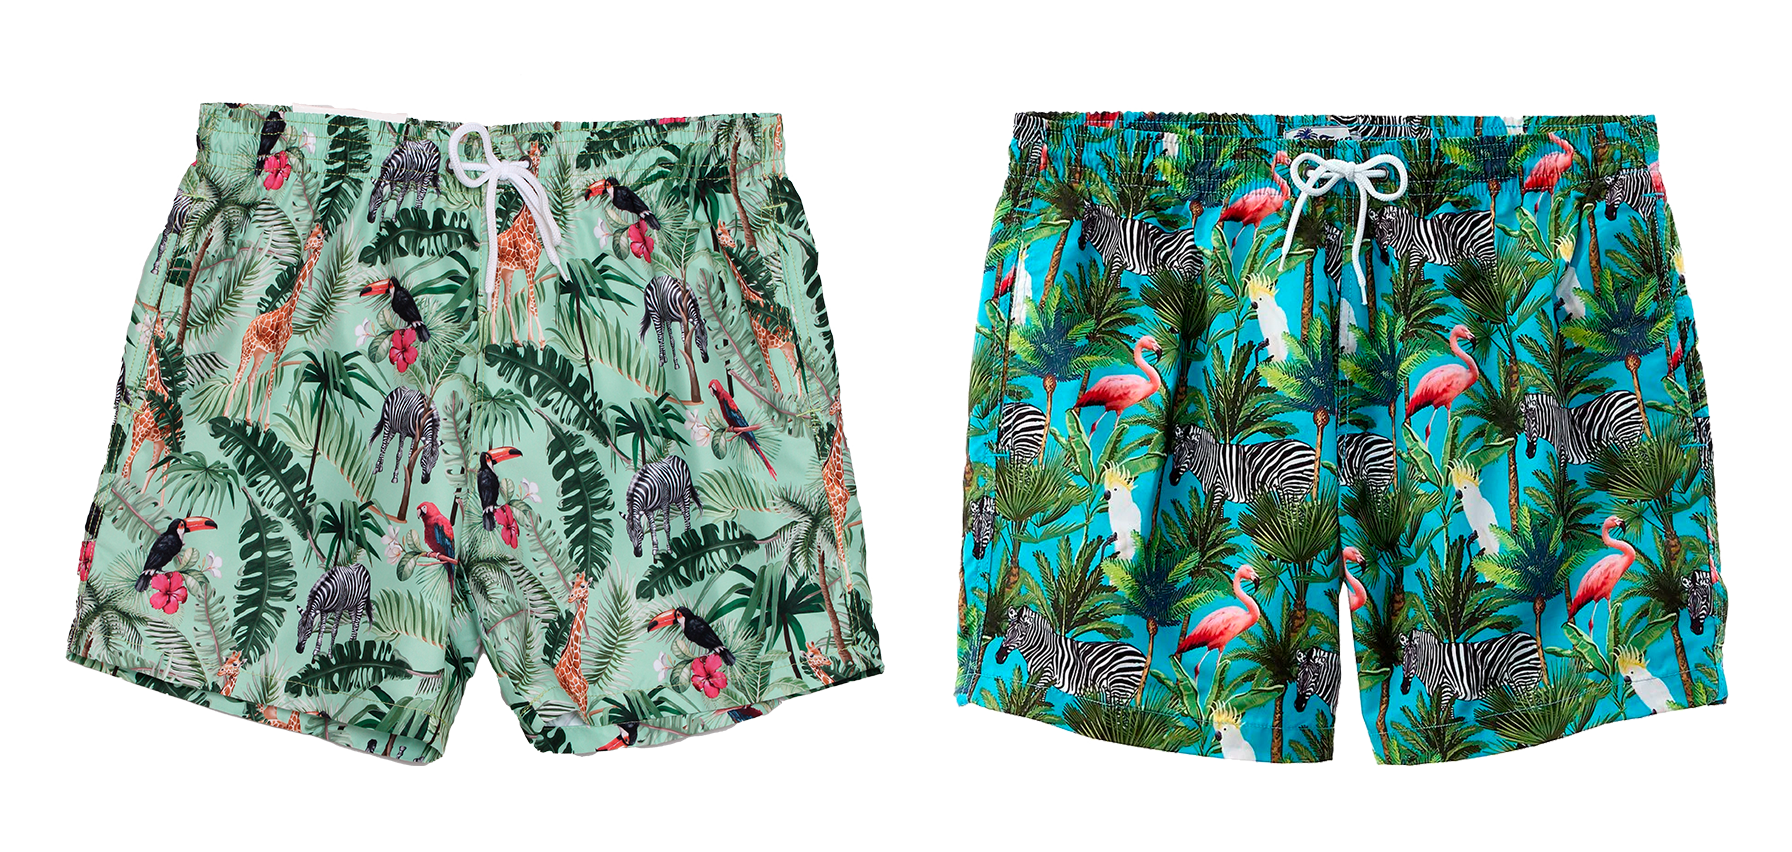 Men's High Fashion Swim Trunks w/ Tropical Jungle & ANIMAL Print - Sizes Small-XL